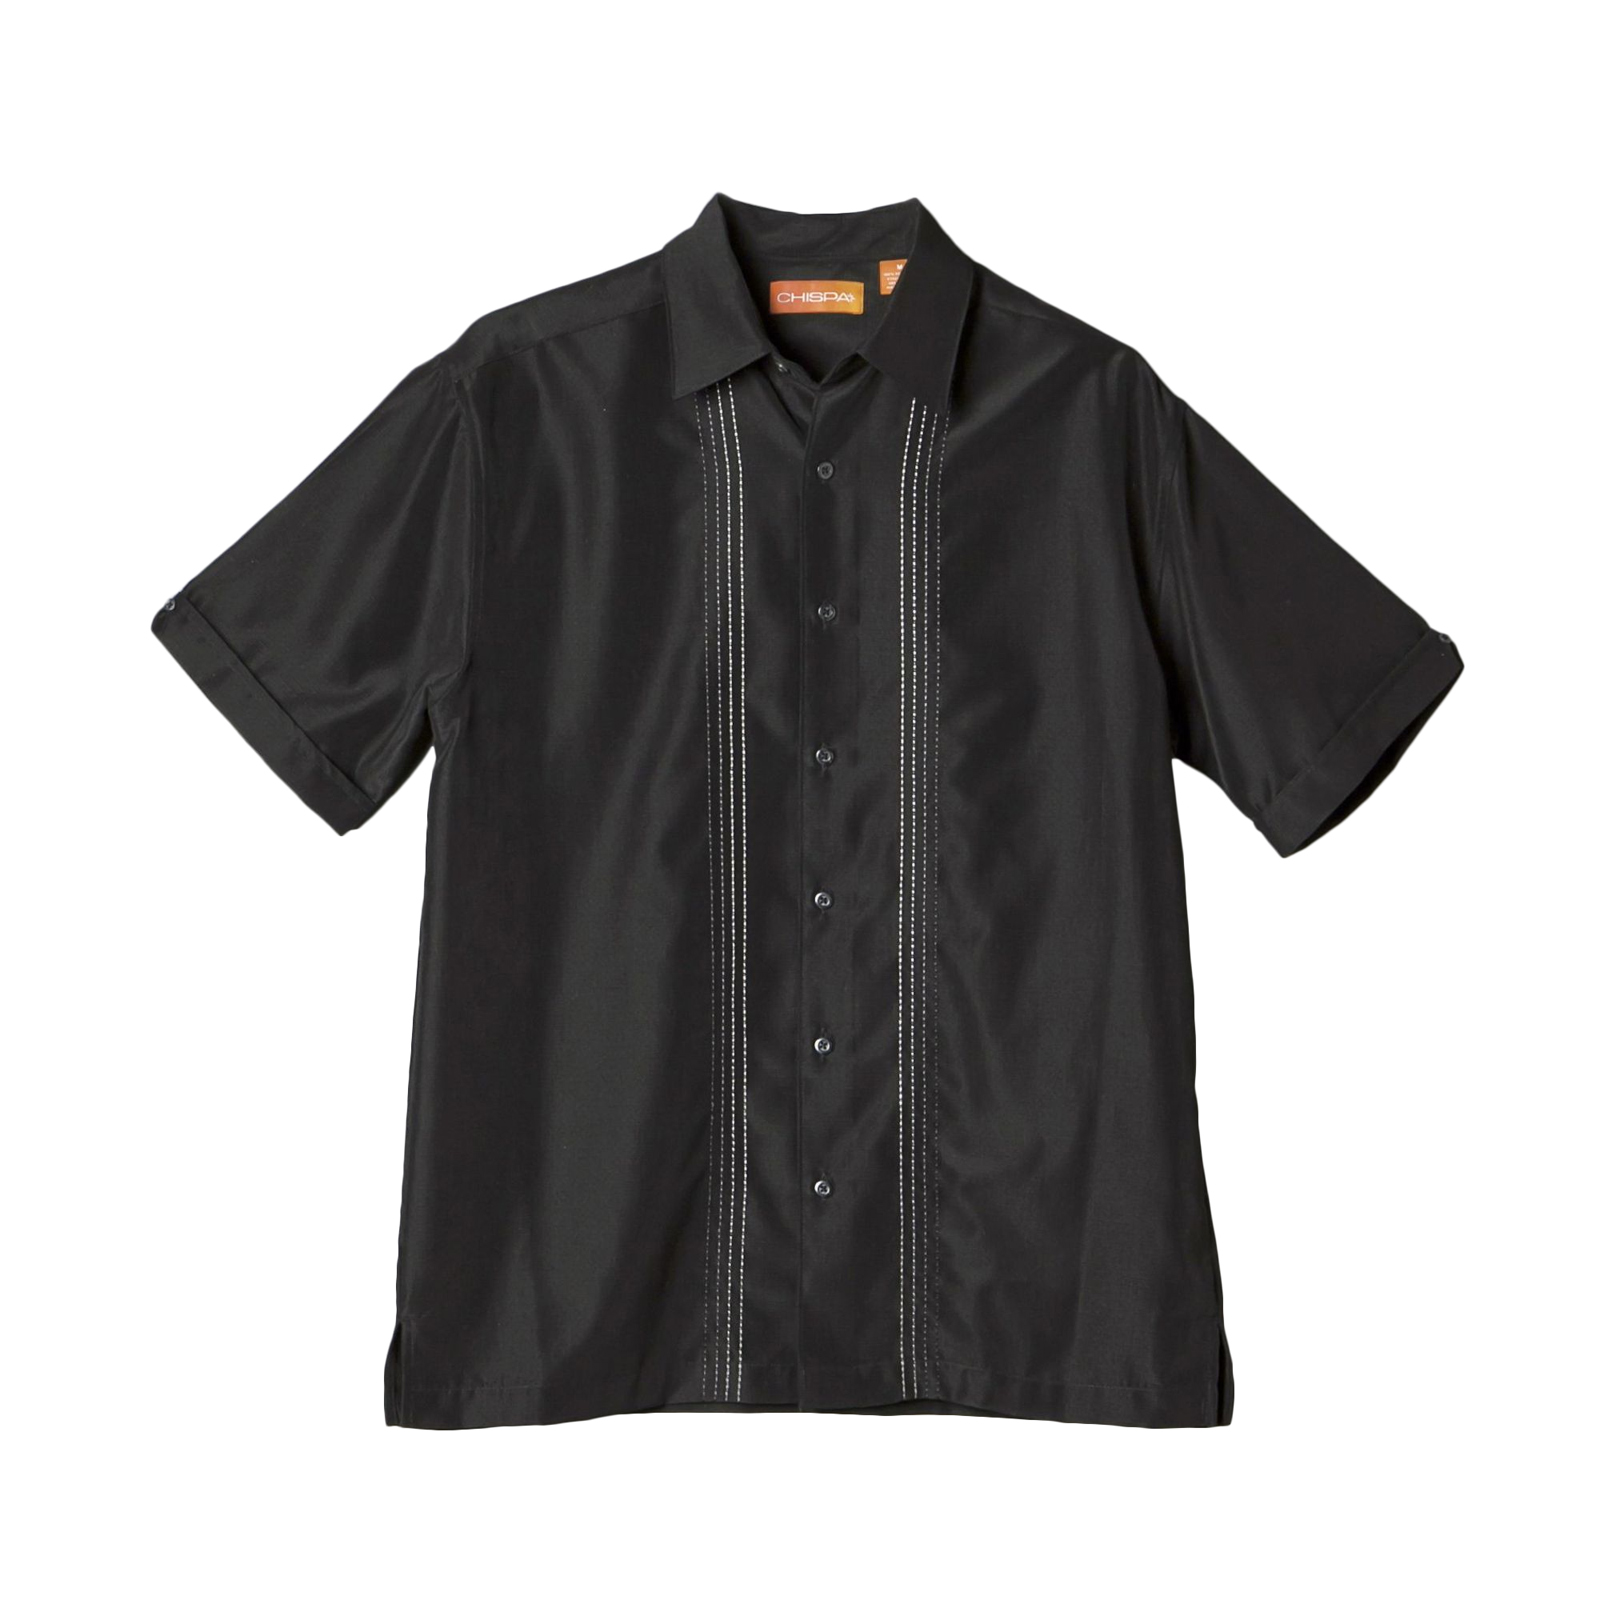 Chispa Men s Shirt Bowling Short Sleeve Black